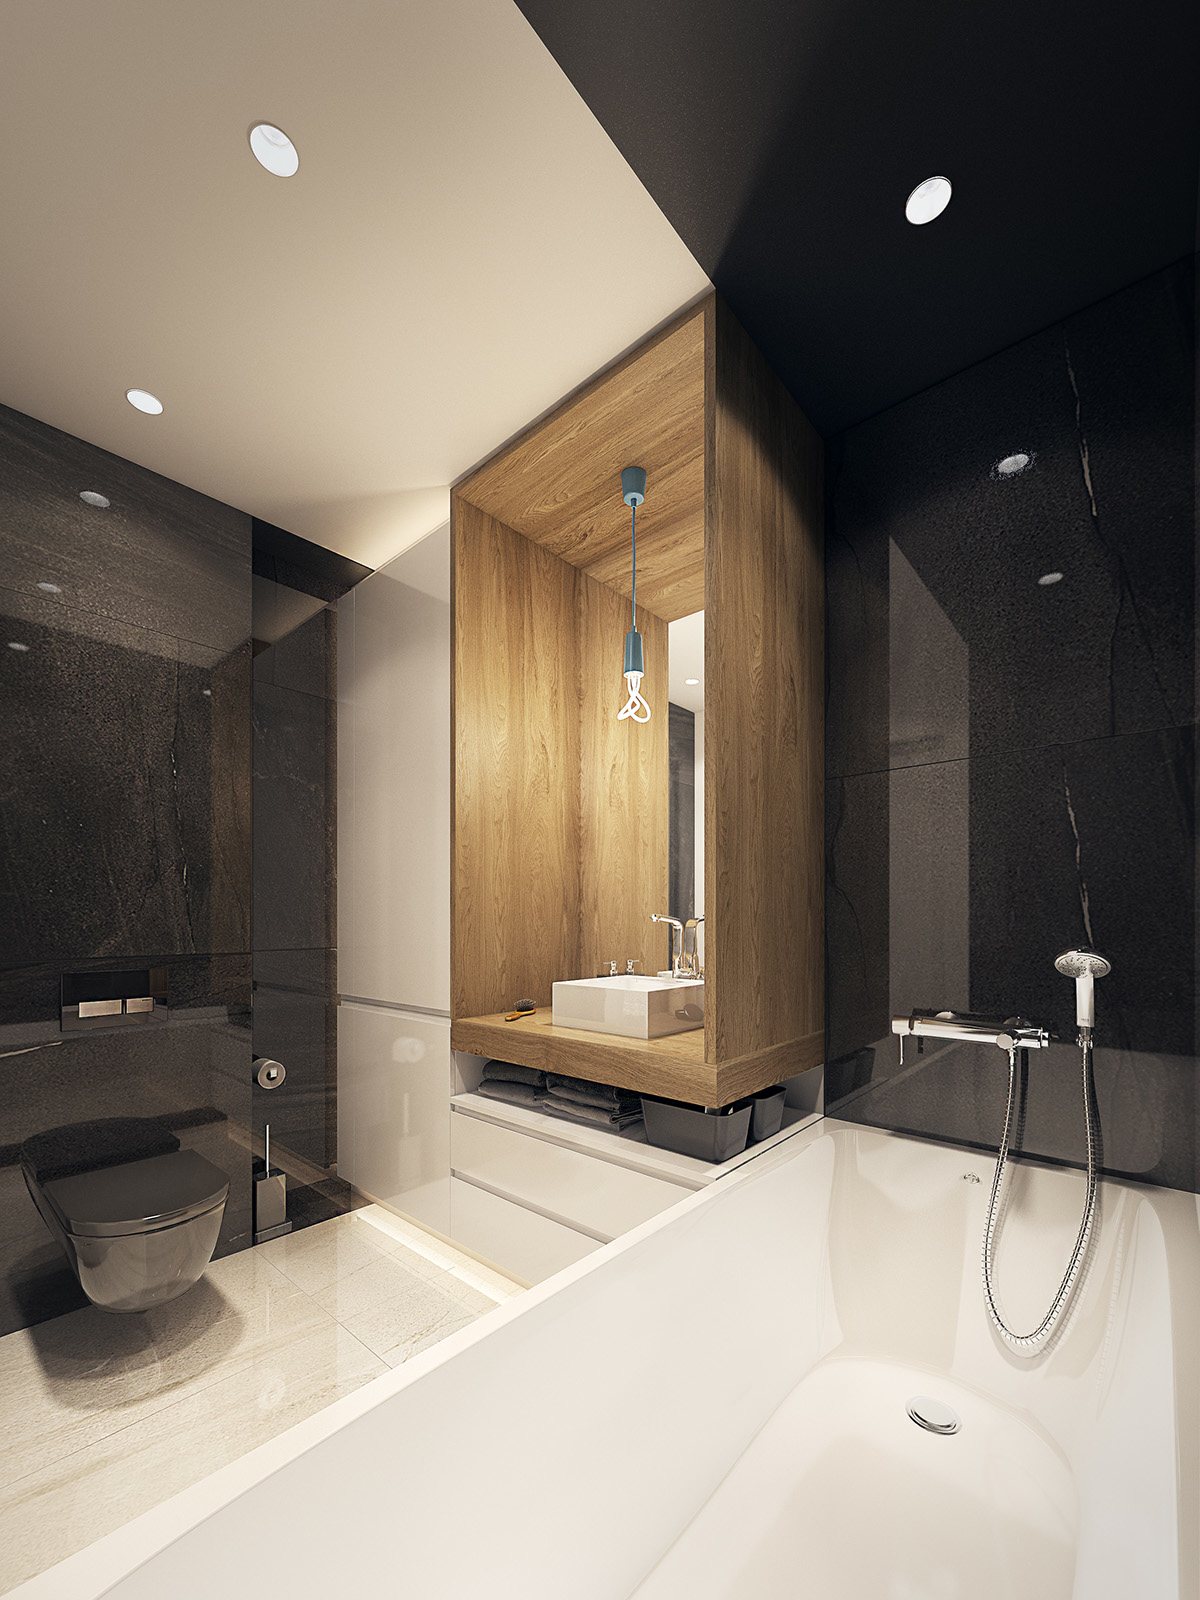 gray bathroom design "width =" 1200 "height =" 1600 "srcset =" https://mileray.com/wp-content/uploads/2020/05/1588515698_349_Modern-Bathroom-Design-Ideas-Using-a-Wooden-Accent-As-The.jpg 1200w, https://mileray.com/ wp -content / uploads / 2016/10 / PLASTERLINA-2-225x300.jpg 225w, https://mileray.com/wp-content/uploads/2016/10/PLASTERLINA-2-768x1024.jpg 768w, https: // myfashionos .com / wp-content / uploads / 2016/10 / PLASTERLINA-2-696x928.jpg 696w, https://mileray.com/wp-content/uploads/2016/10/PLASTERLINA-2-1068x1424.jpg 1068w, https : //mileray.com/wp-content/uploads/2016/10/PLASTERLINA-2-315x420.jpg 315w "sizes =" (maximum width: 1200px) 100vw, 1200px